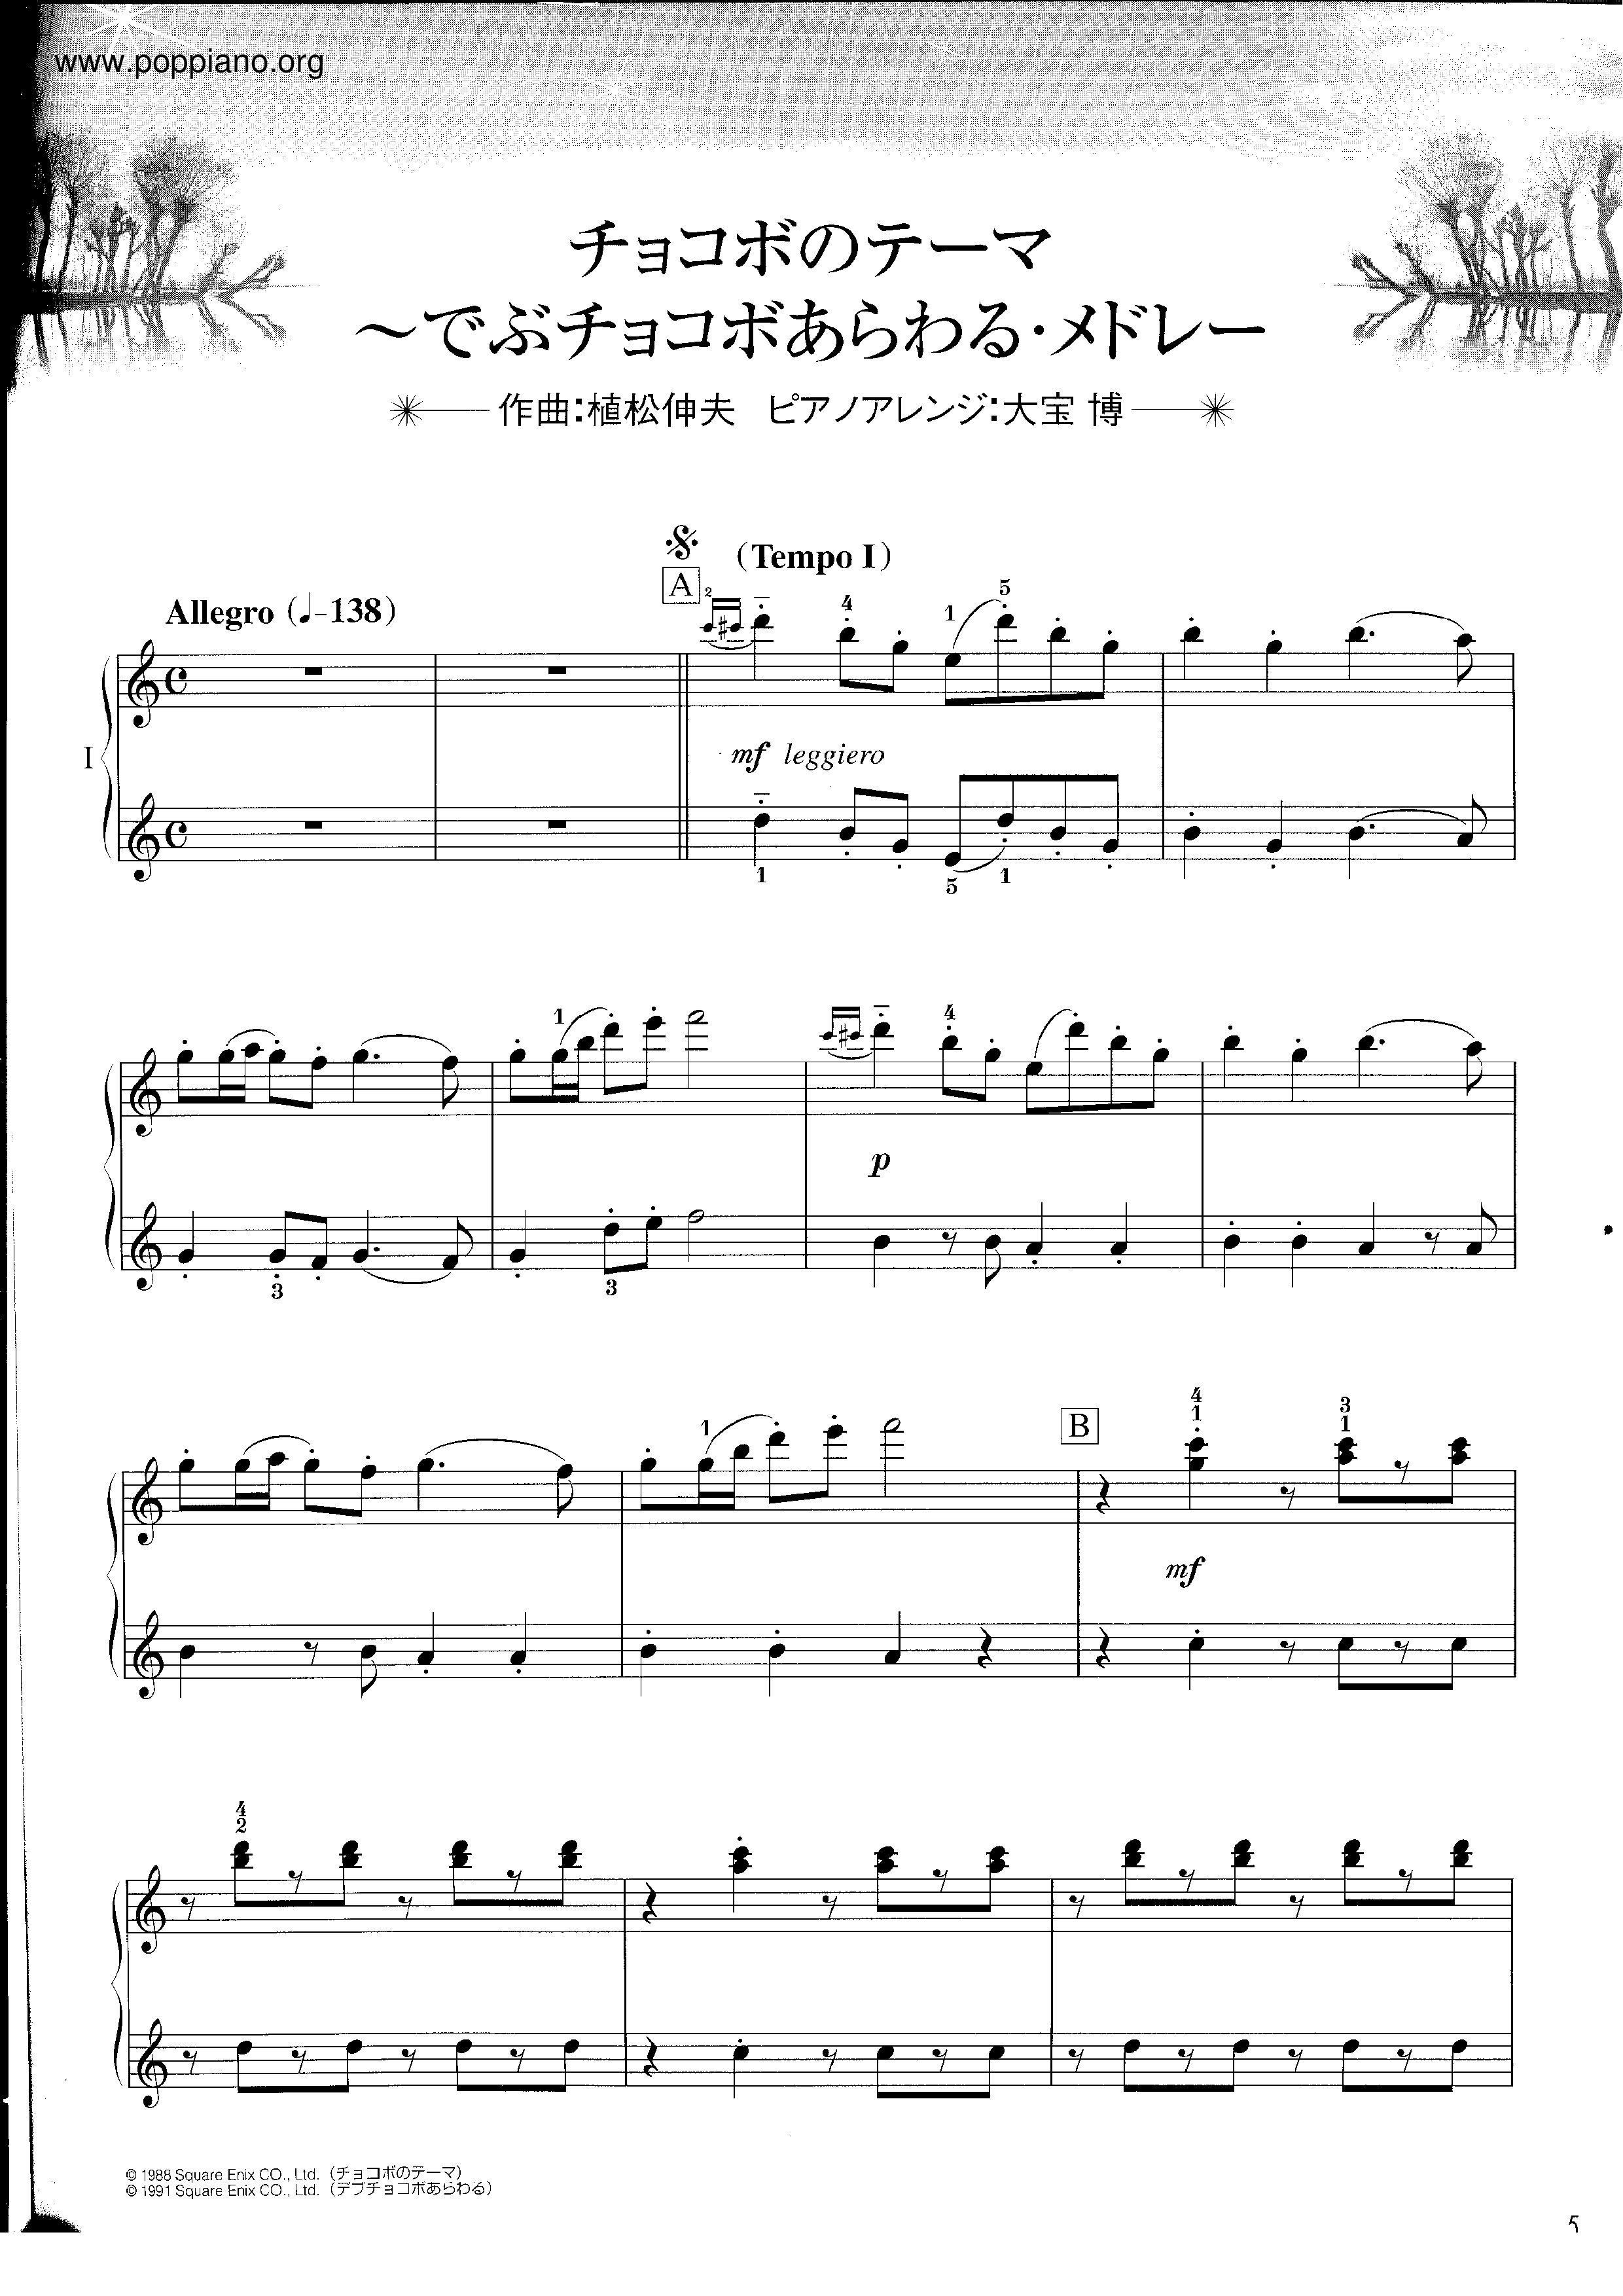 Big Chocobo! - Final Fantasy IIIピアノ譜